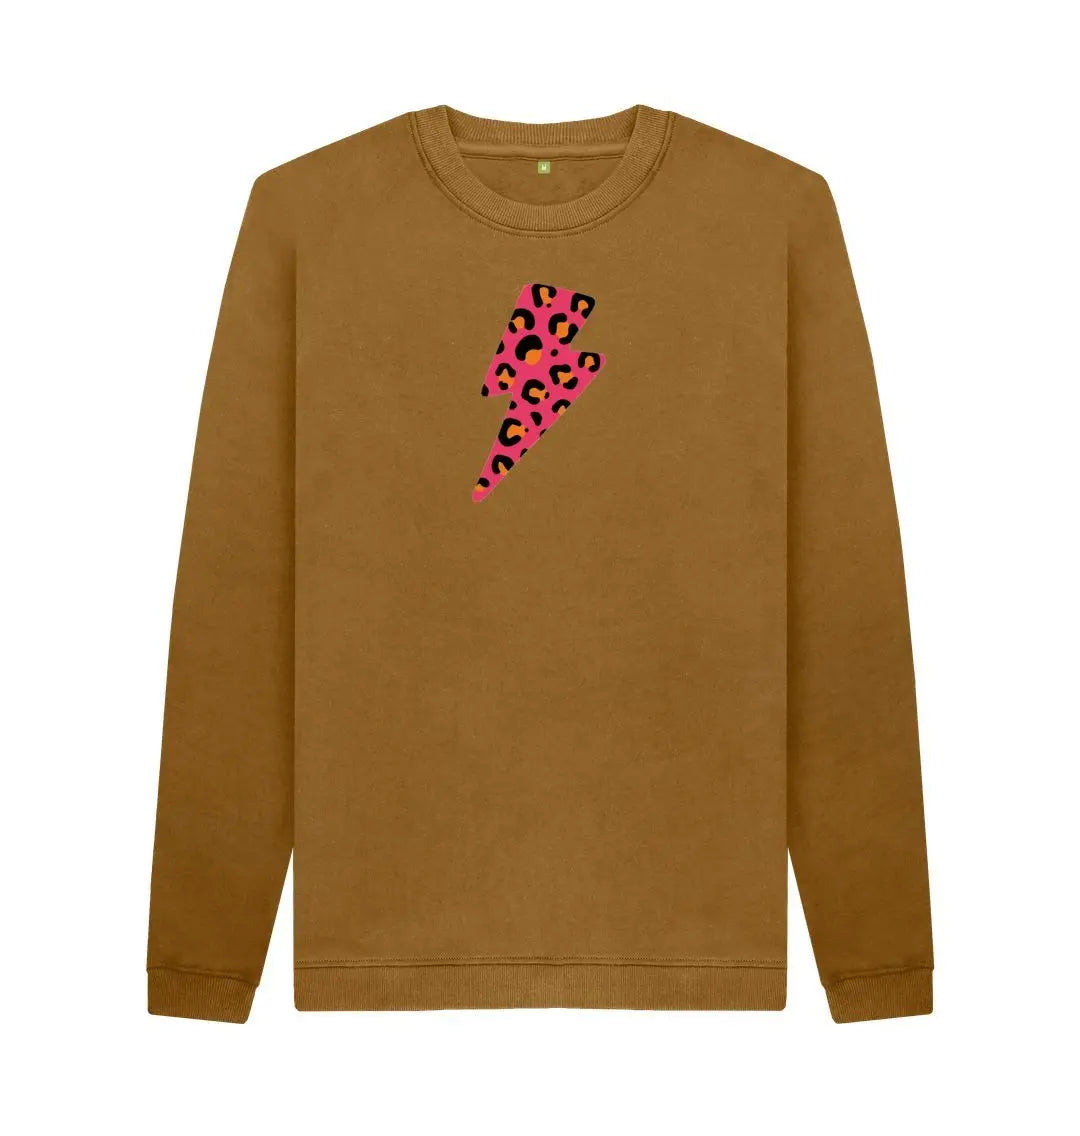 Red and orange leopard print lightning bolt unisex sweater